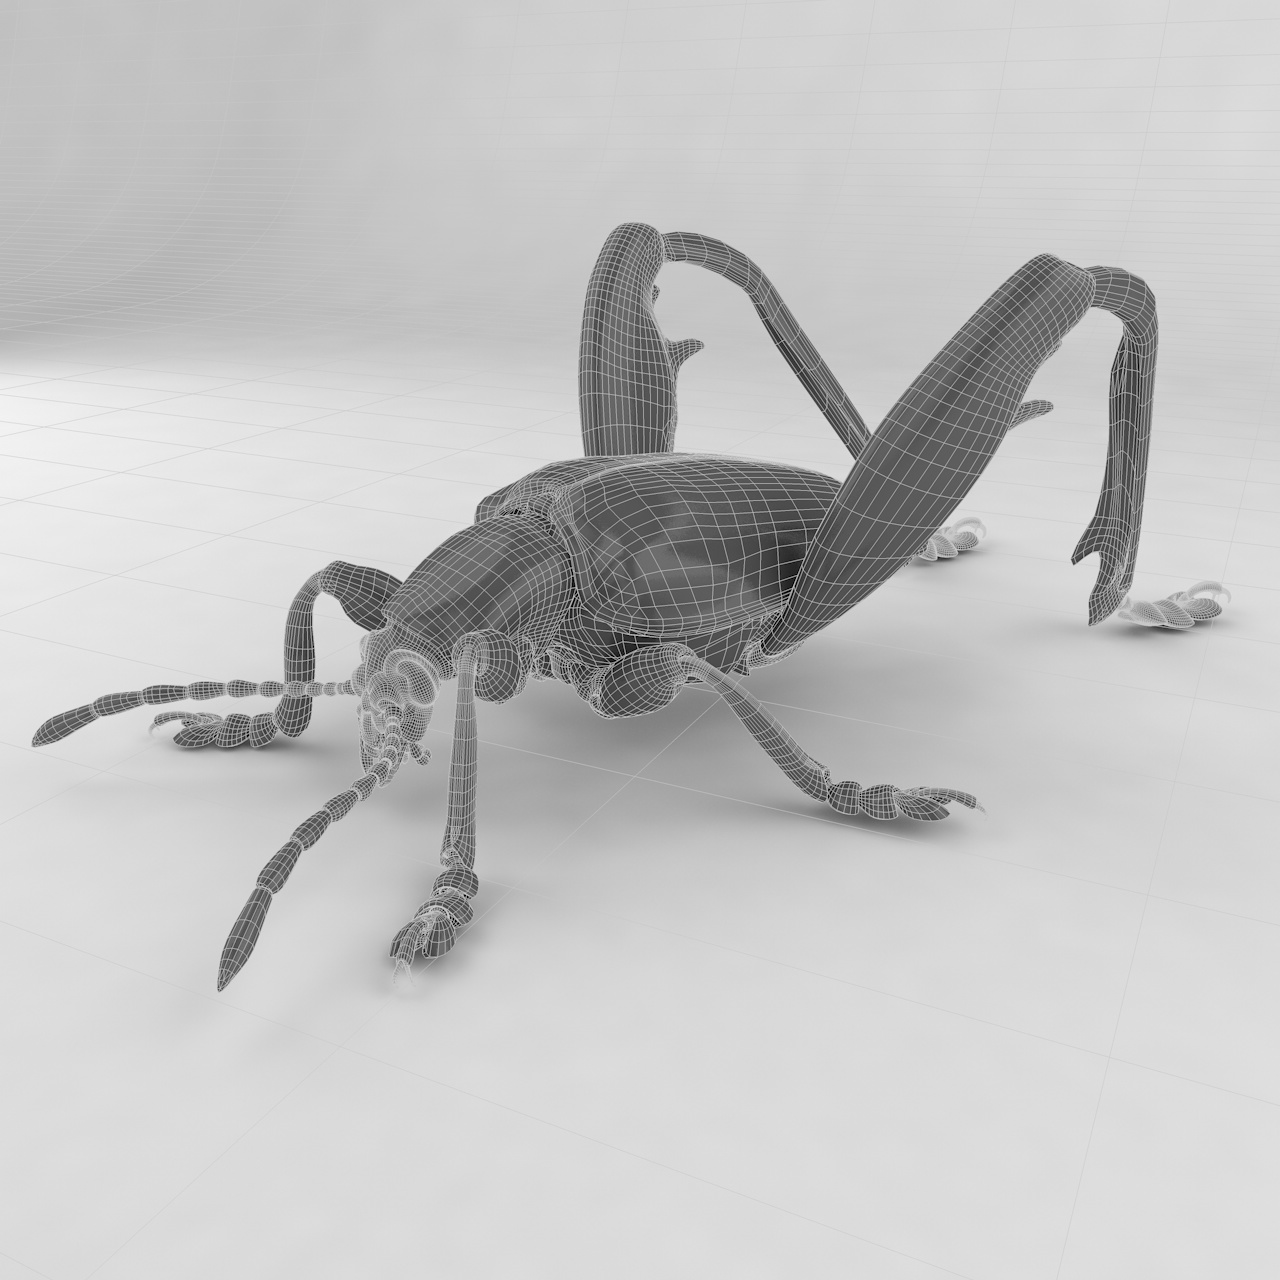 Sagra petelii insect beetles 3d model